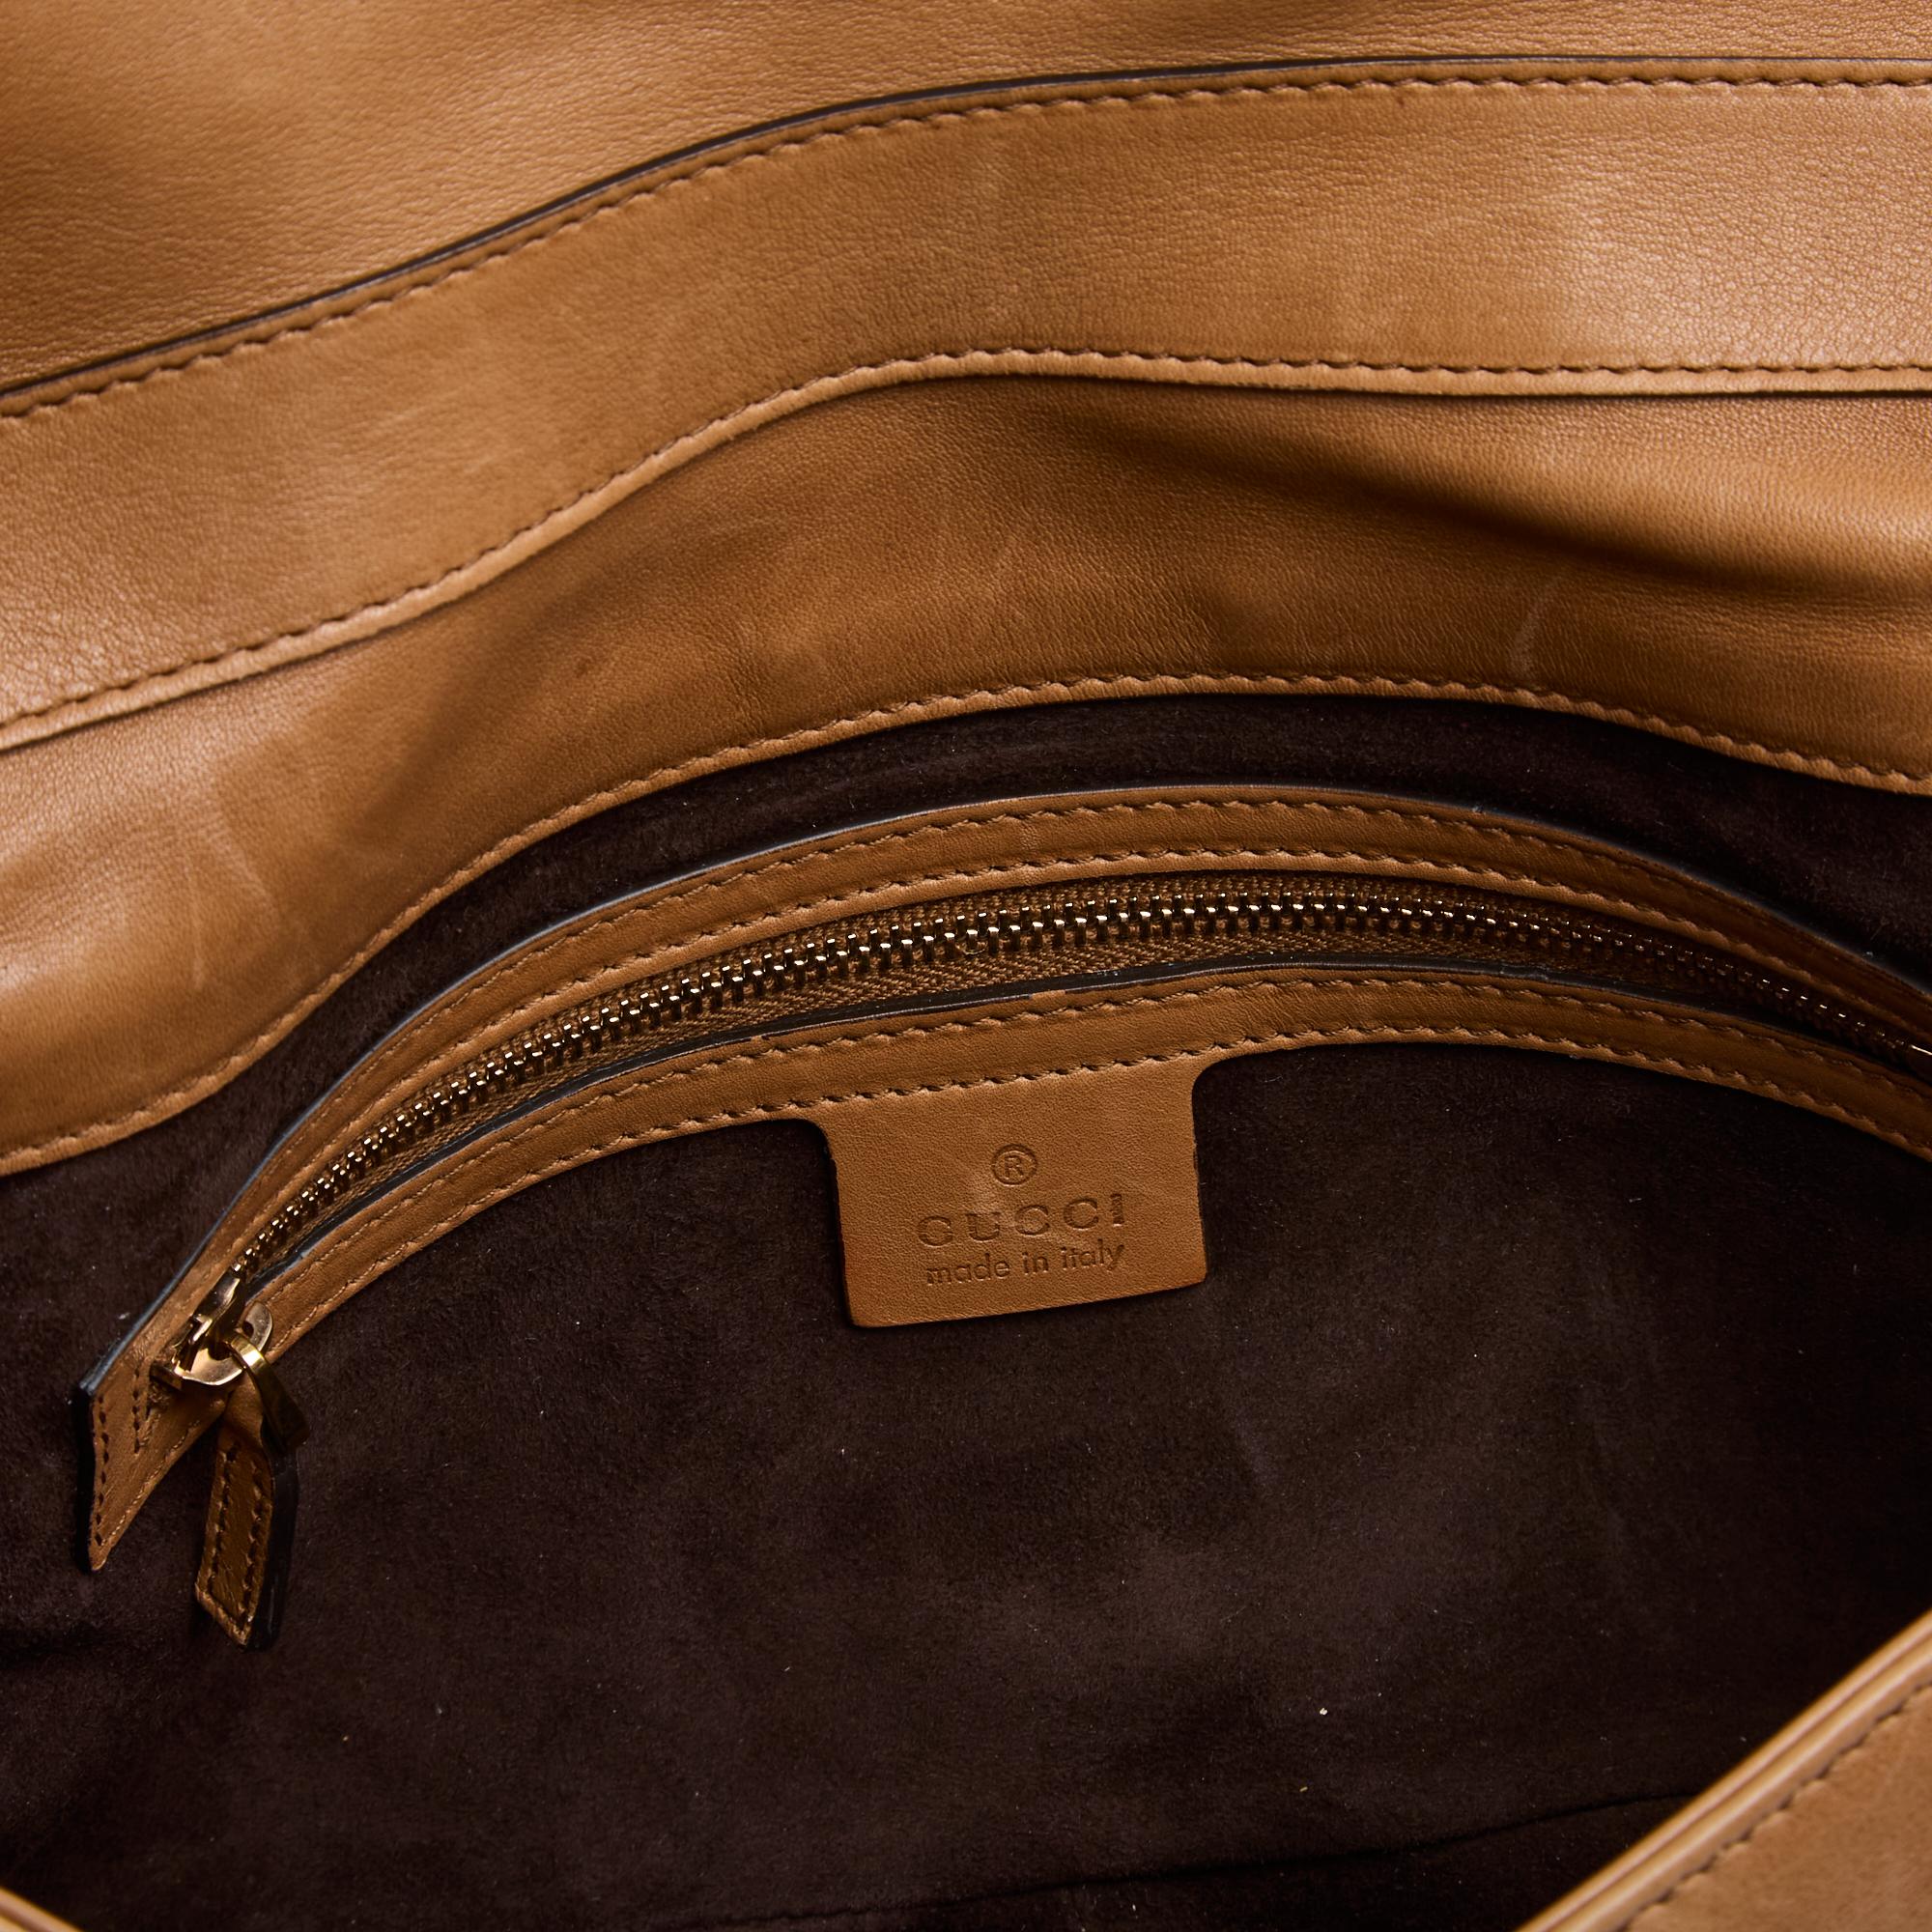 Gucci sac Marrakech Natural Leather Intrecciato Bag Limited Edition 2